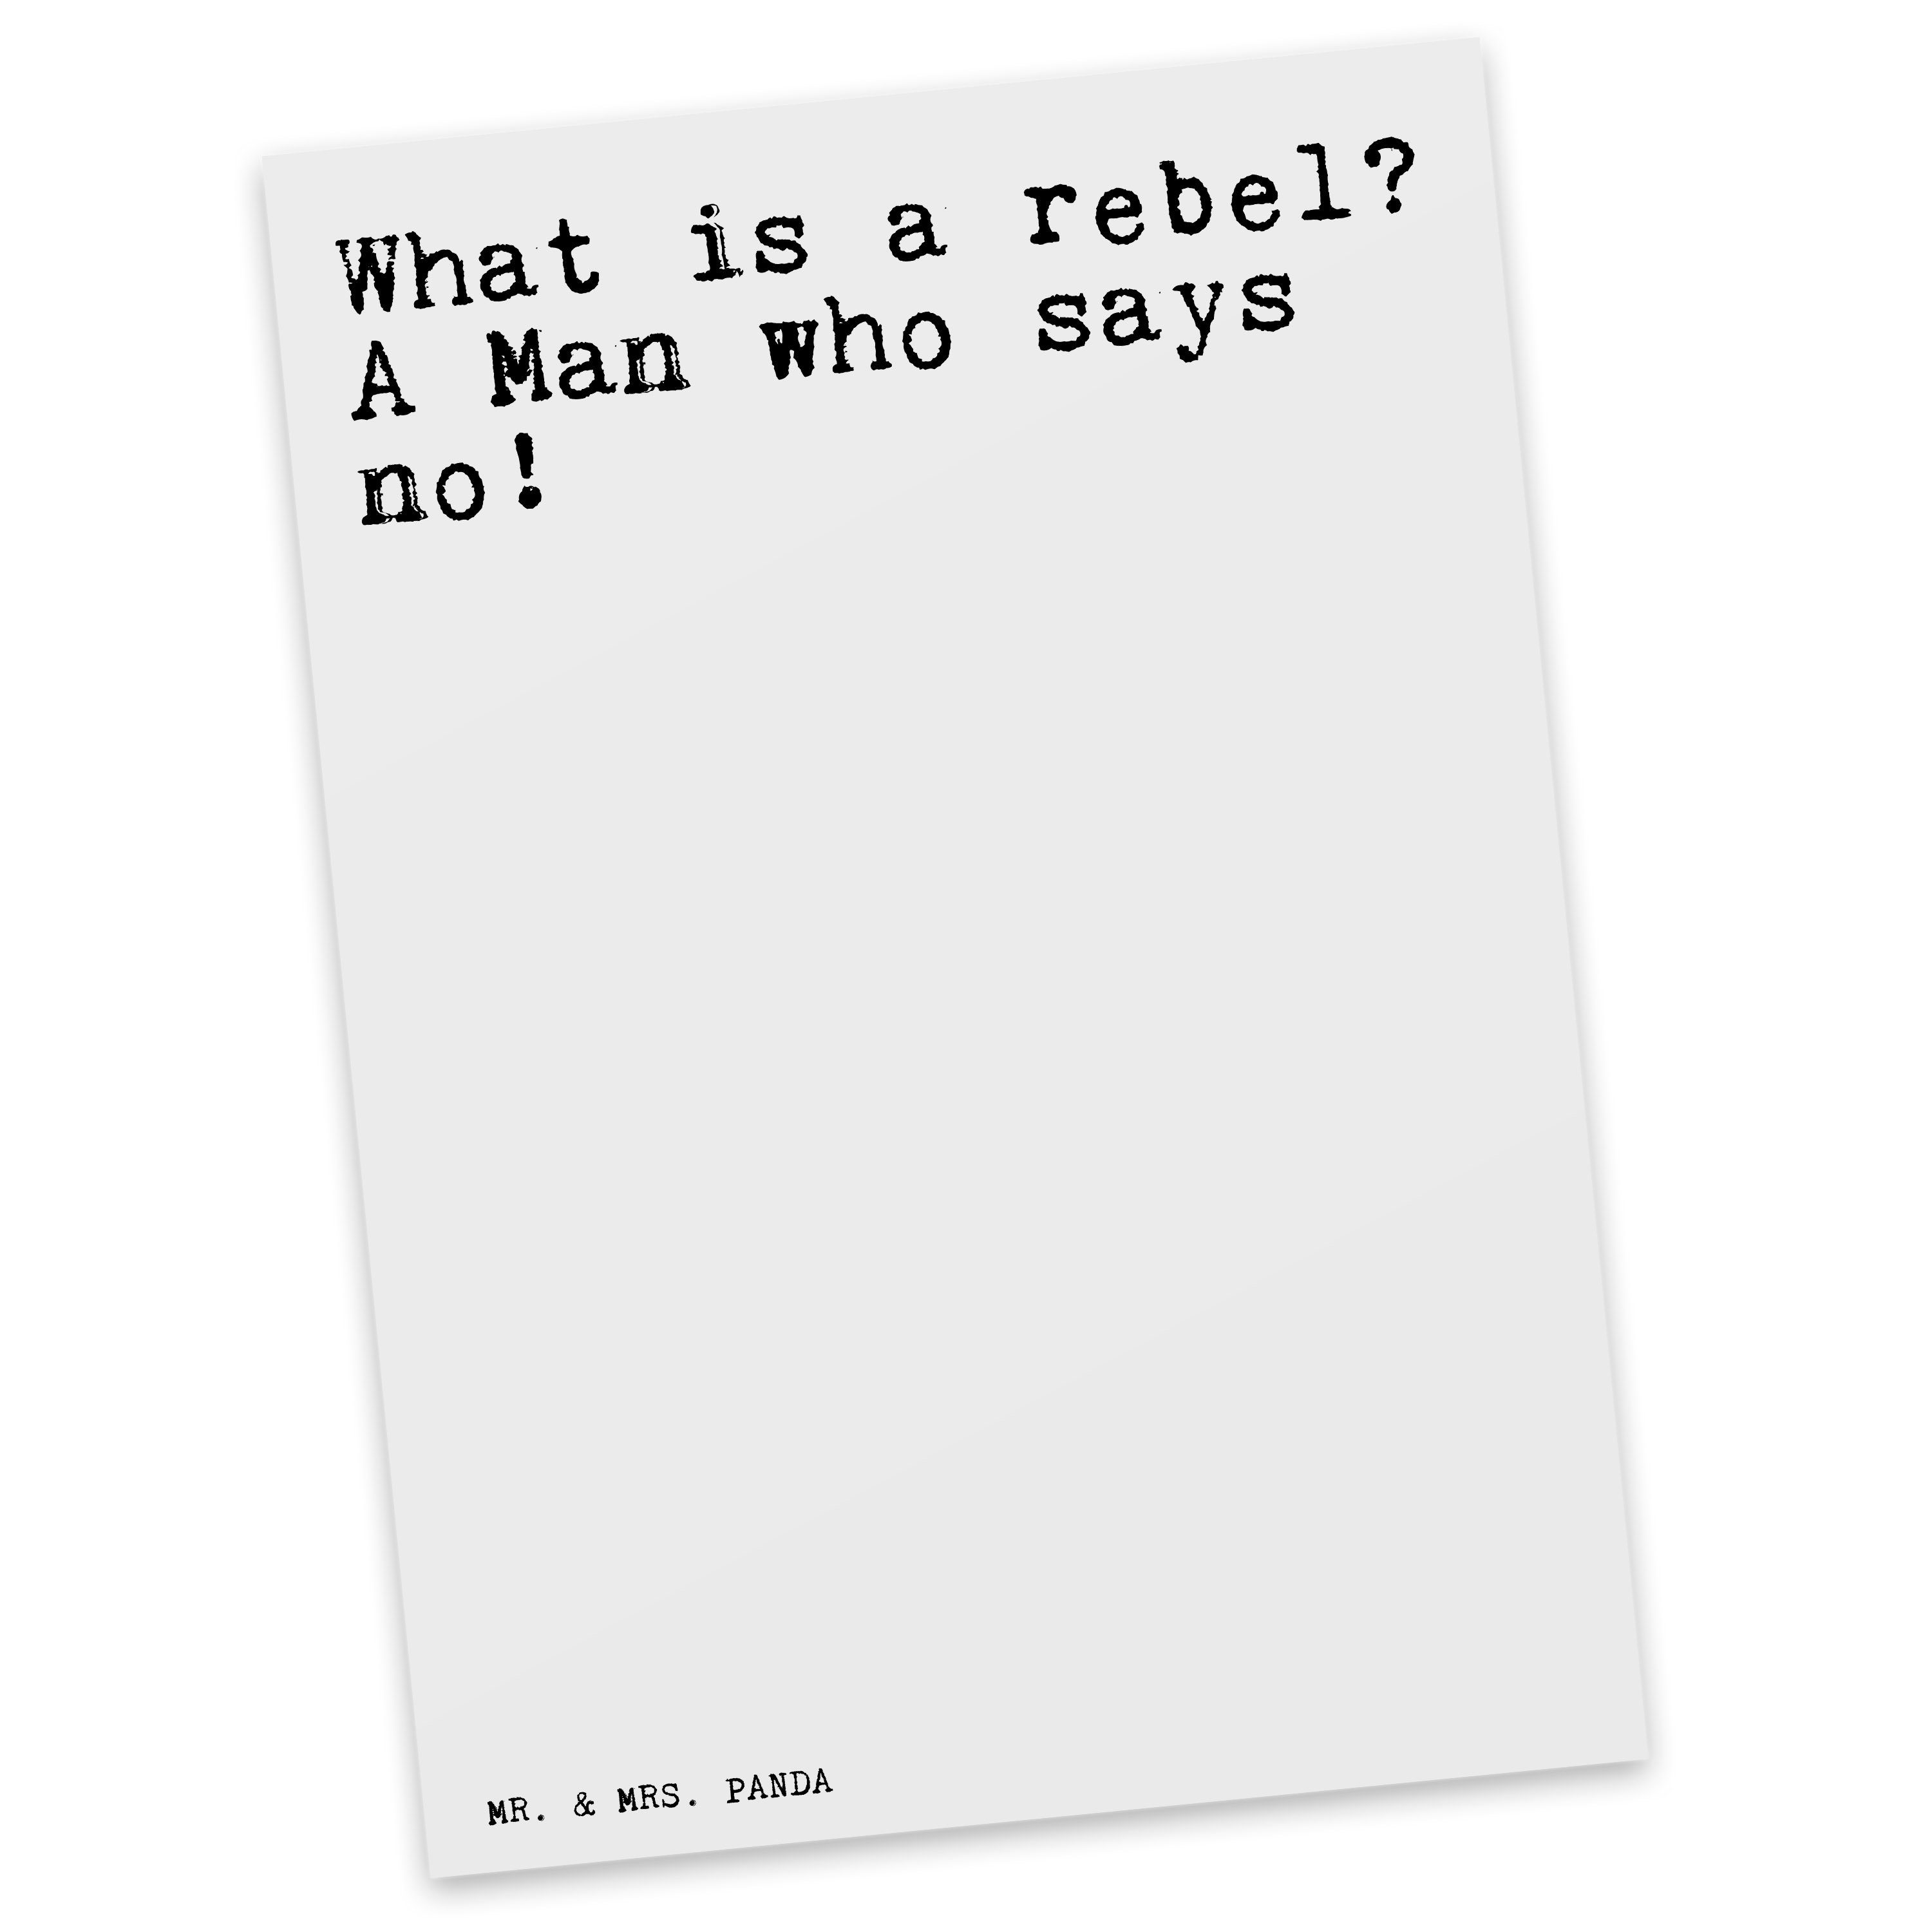 What - Karte, Postkarte Weiß Panda Zitat, a - Einladun & Mrs. is Geschenk, Rebell, rebel?... Mr.